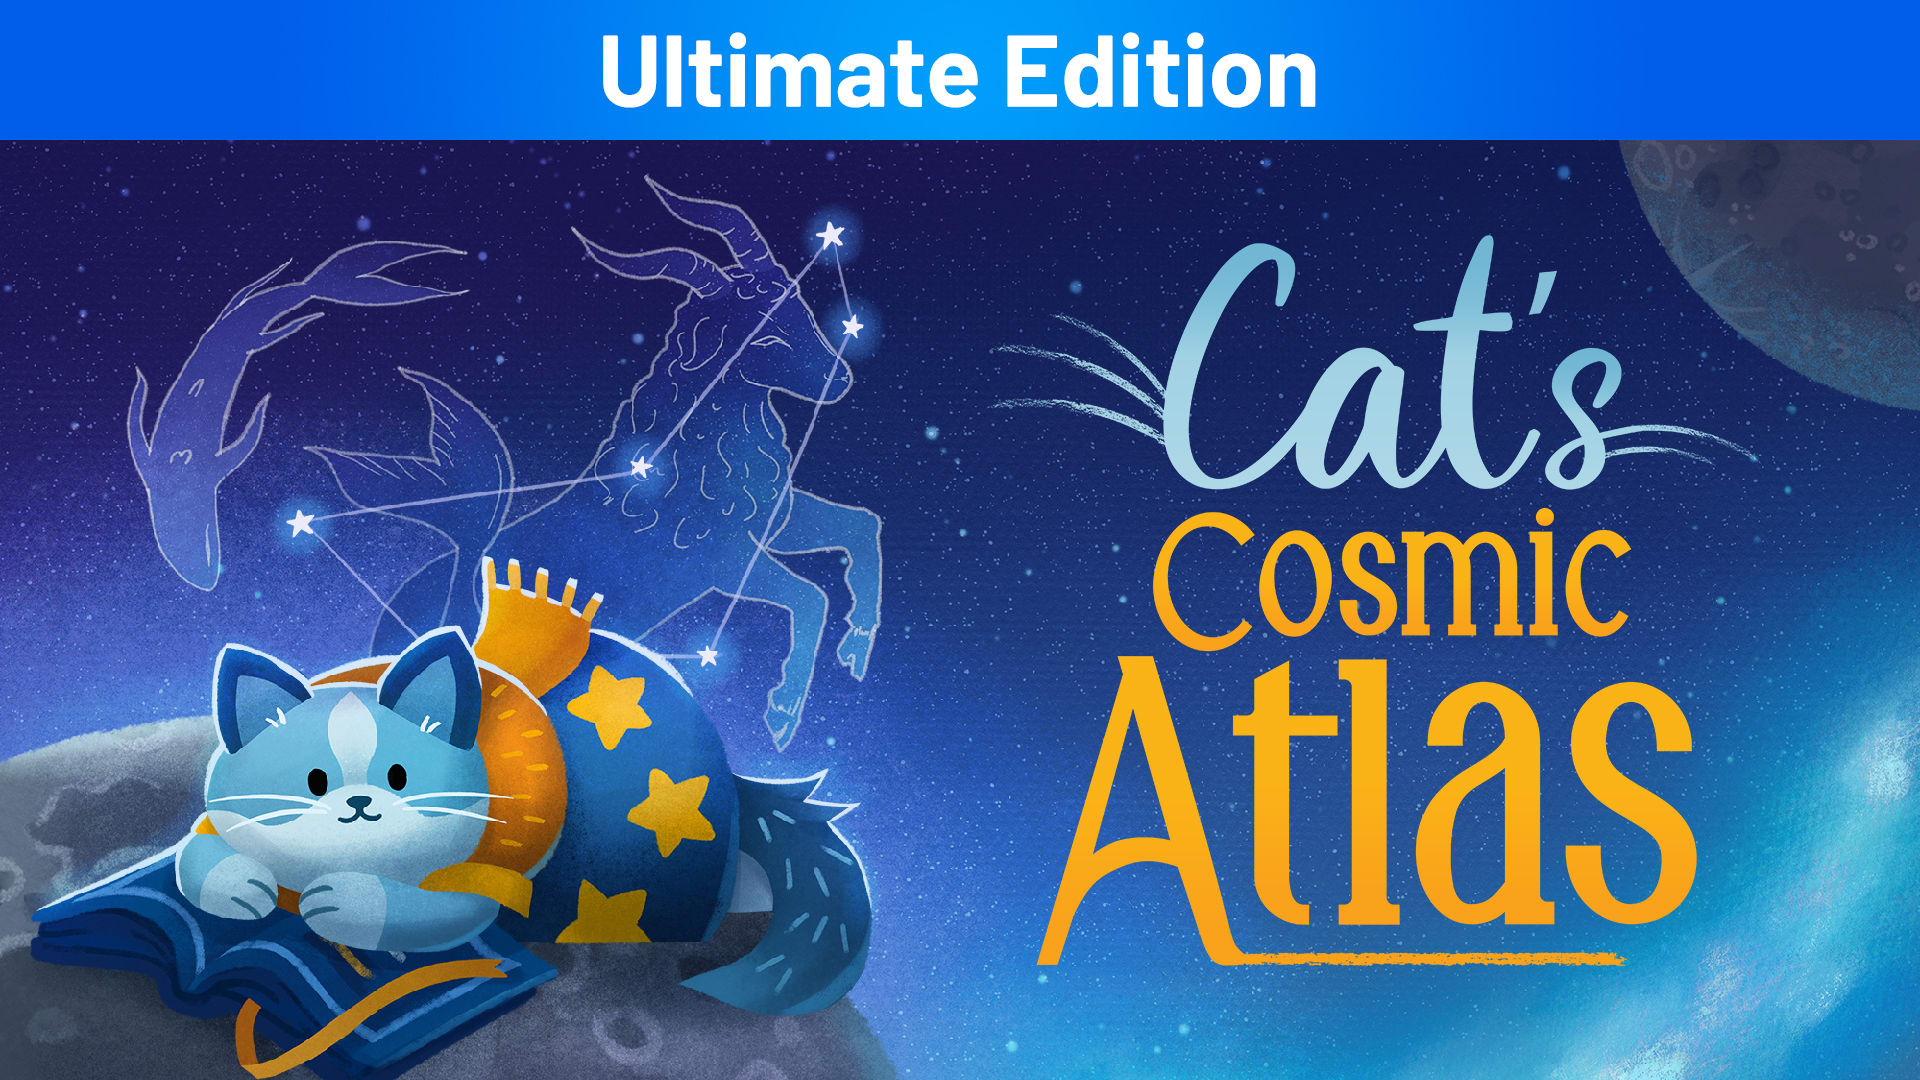 Cat's Cosmic Atlas Ultimate Edition